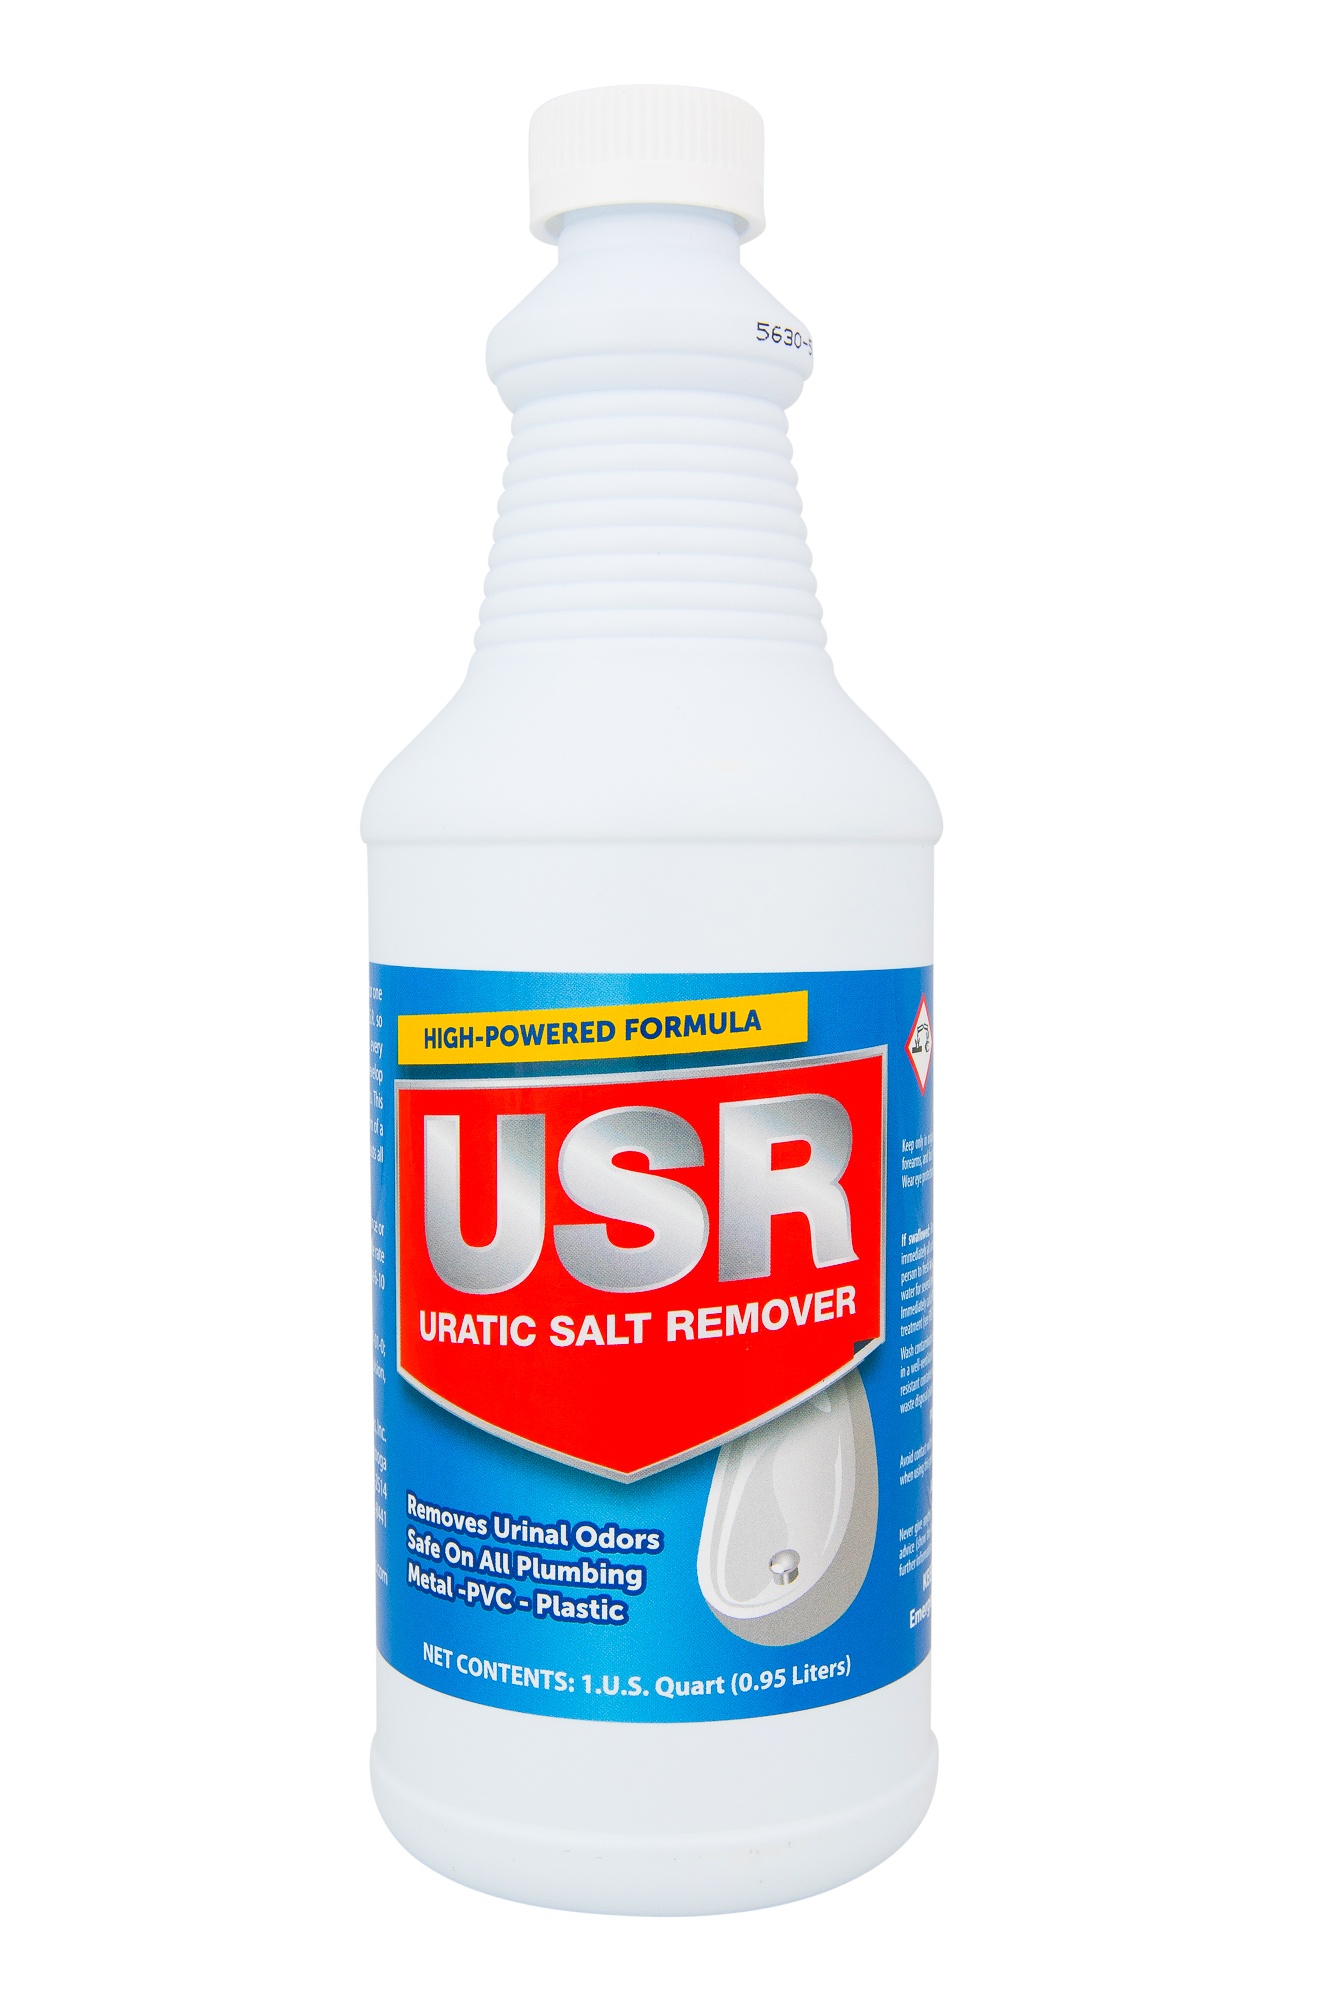 USR Uratic Salts Remover - Opens Blocked Urinals